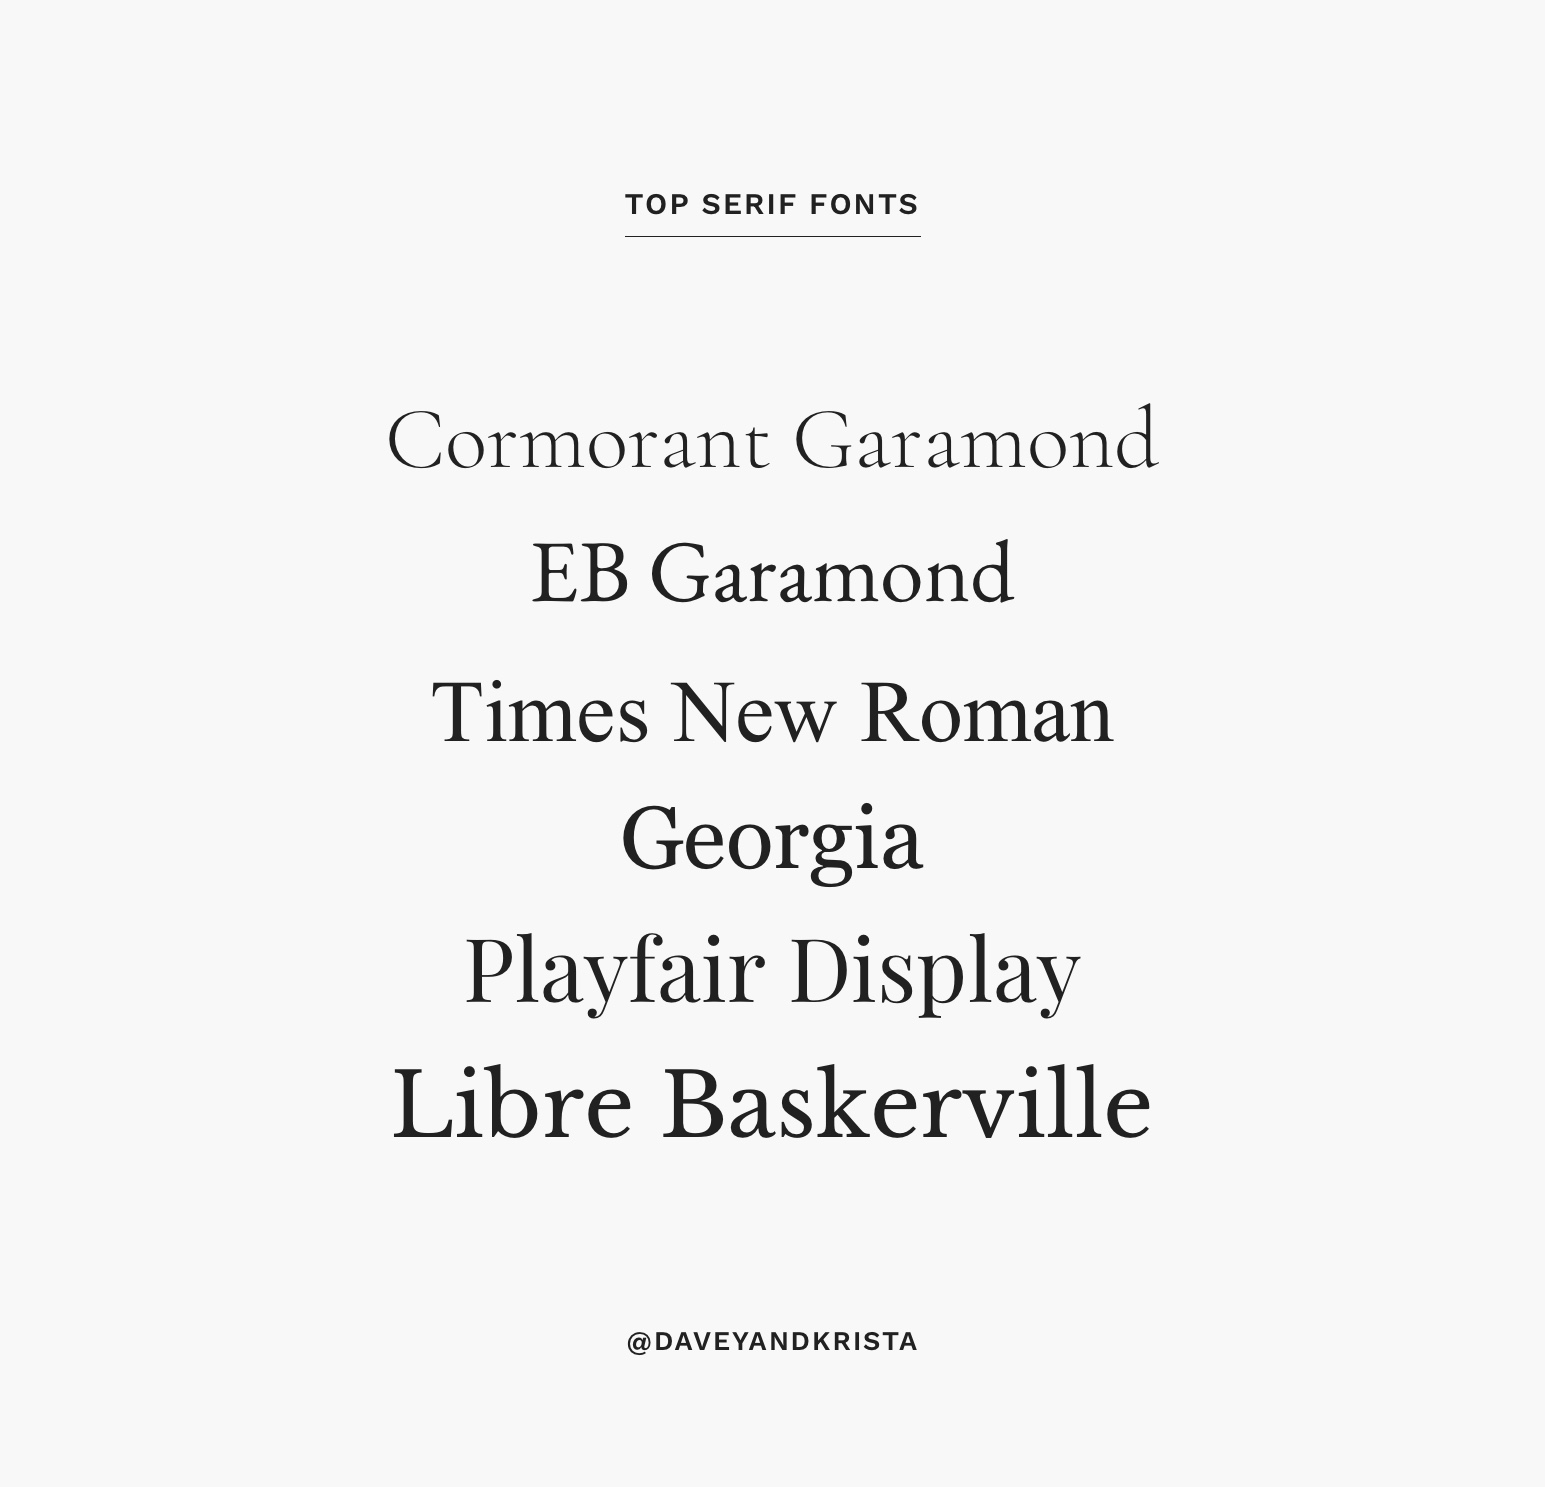 Top serif fonts for websites